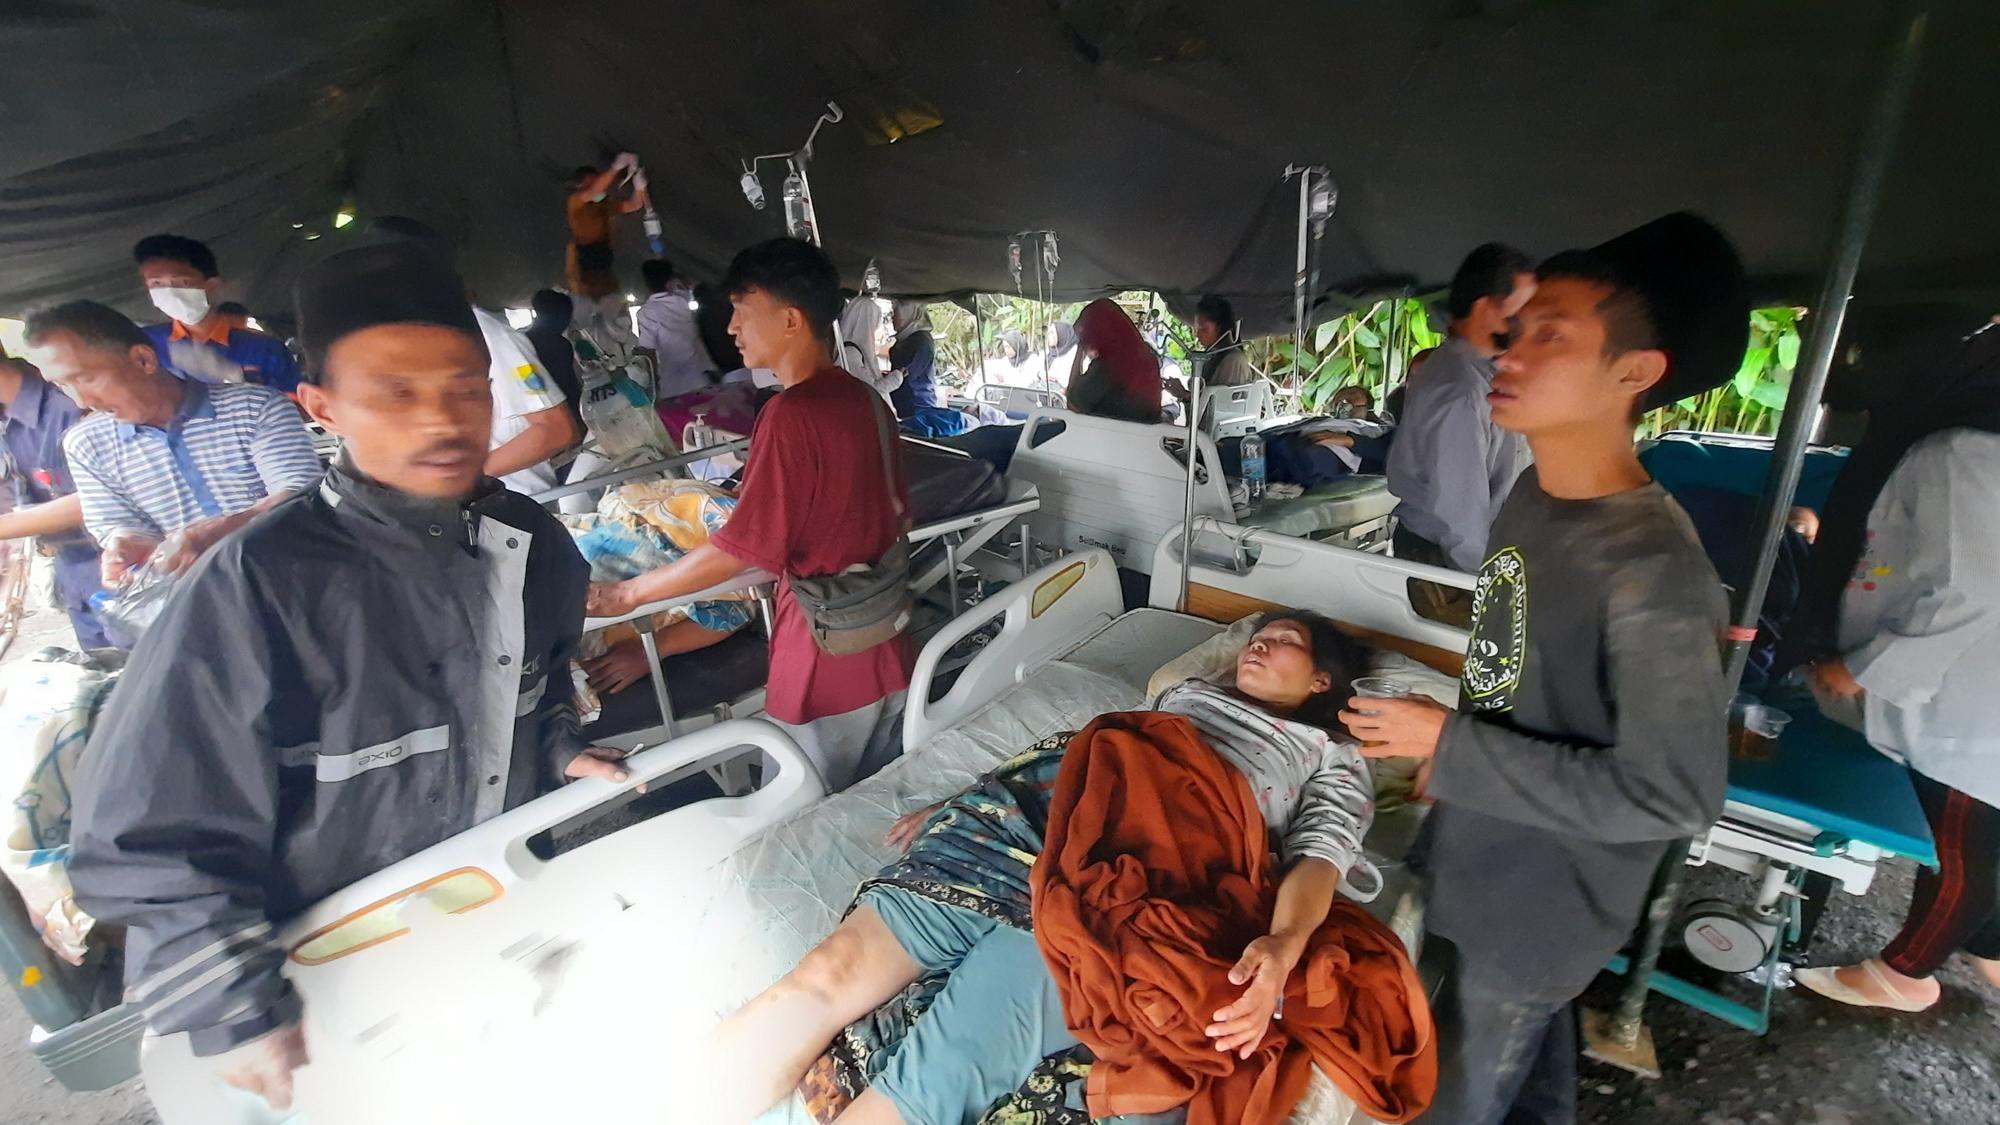 A 5.6 magnitude earthquake hit West Java